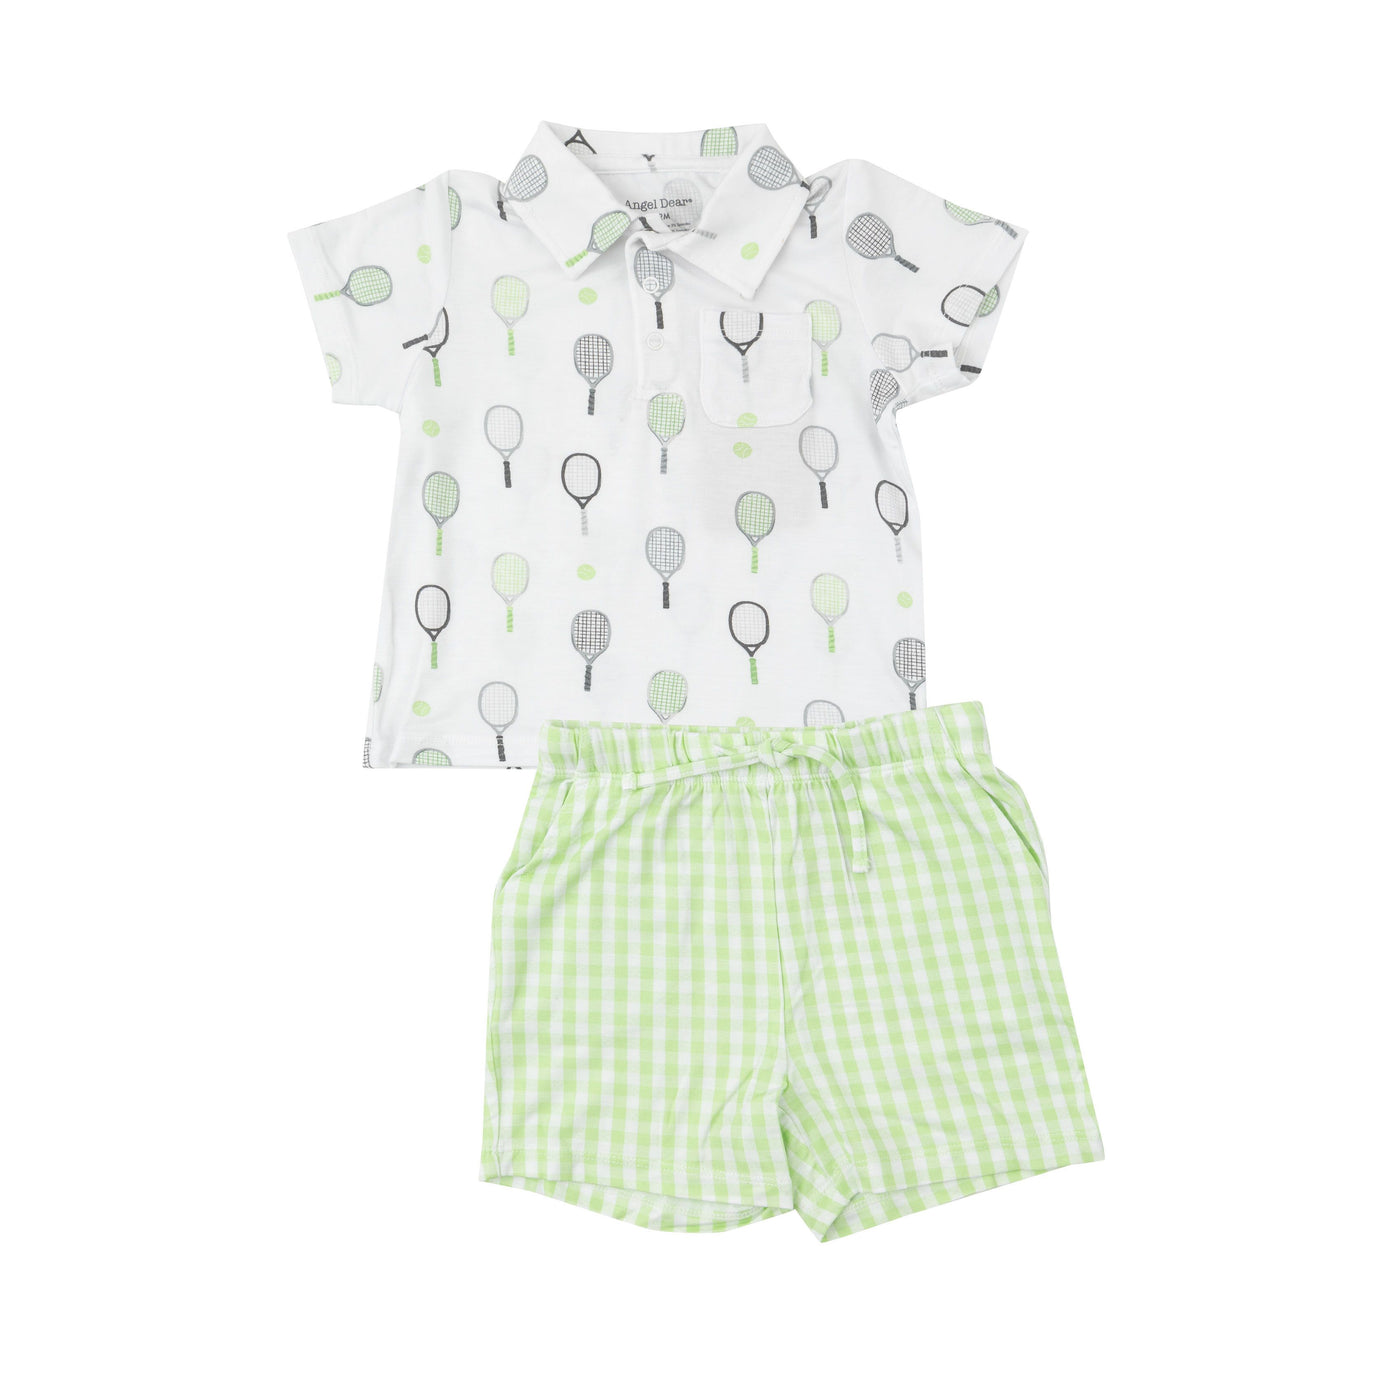 Angel Dear Polo Shirt and Short Set: Green Gingham